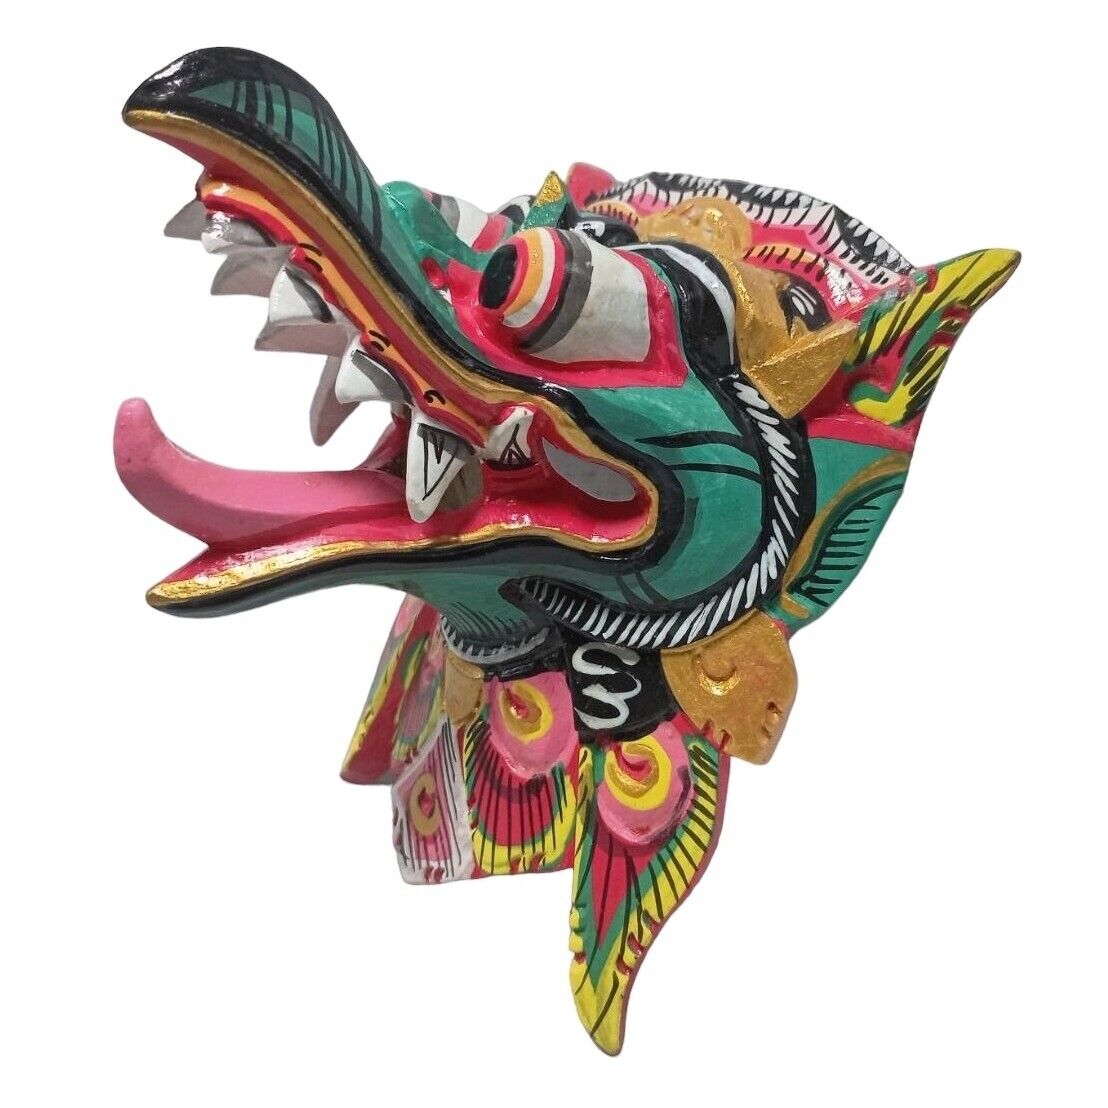 Turquoise Garuda Balinese Indonesia Wooden Mask Bird Wall Art Sculpture Decor